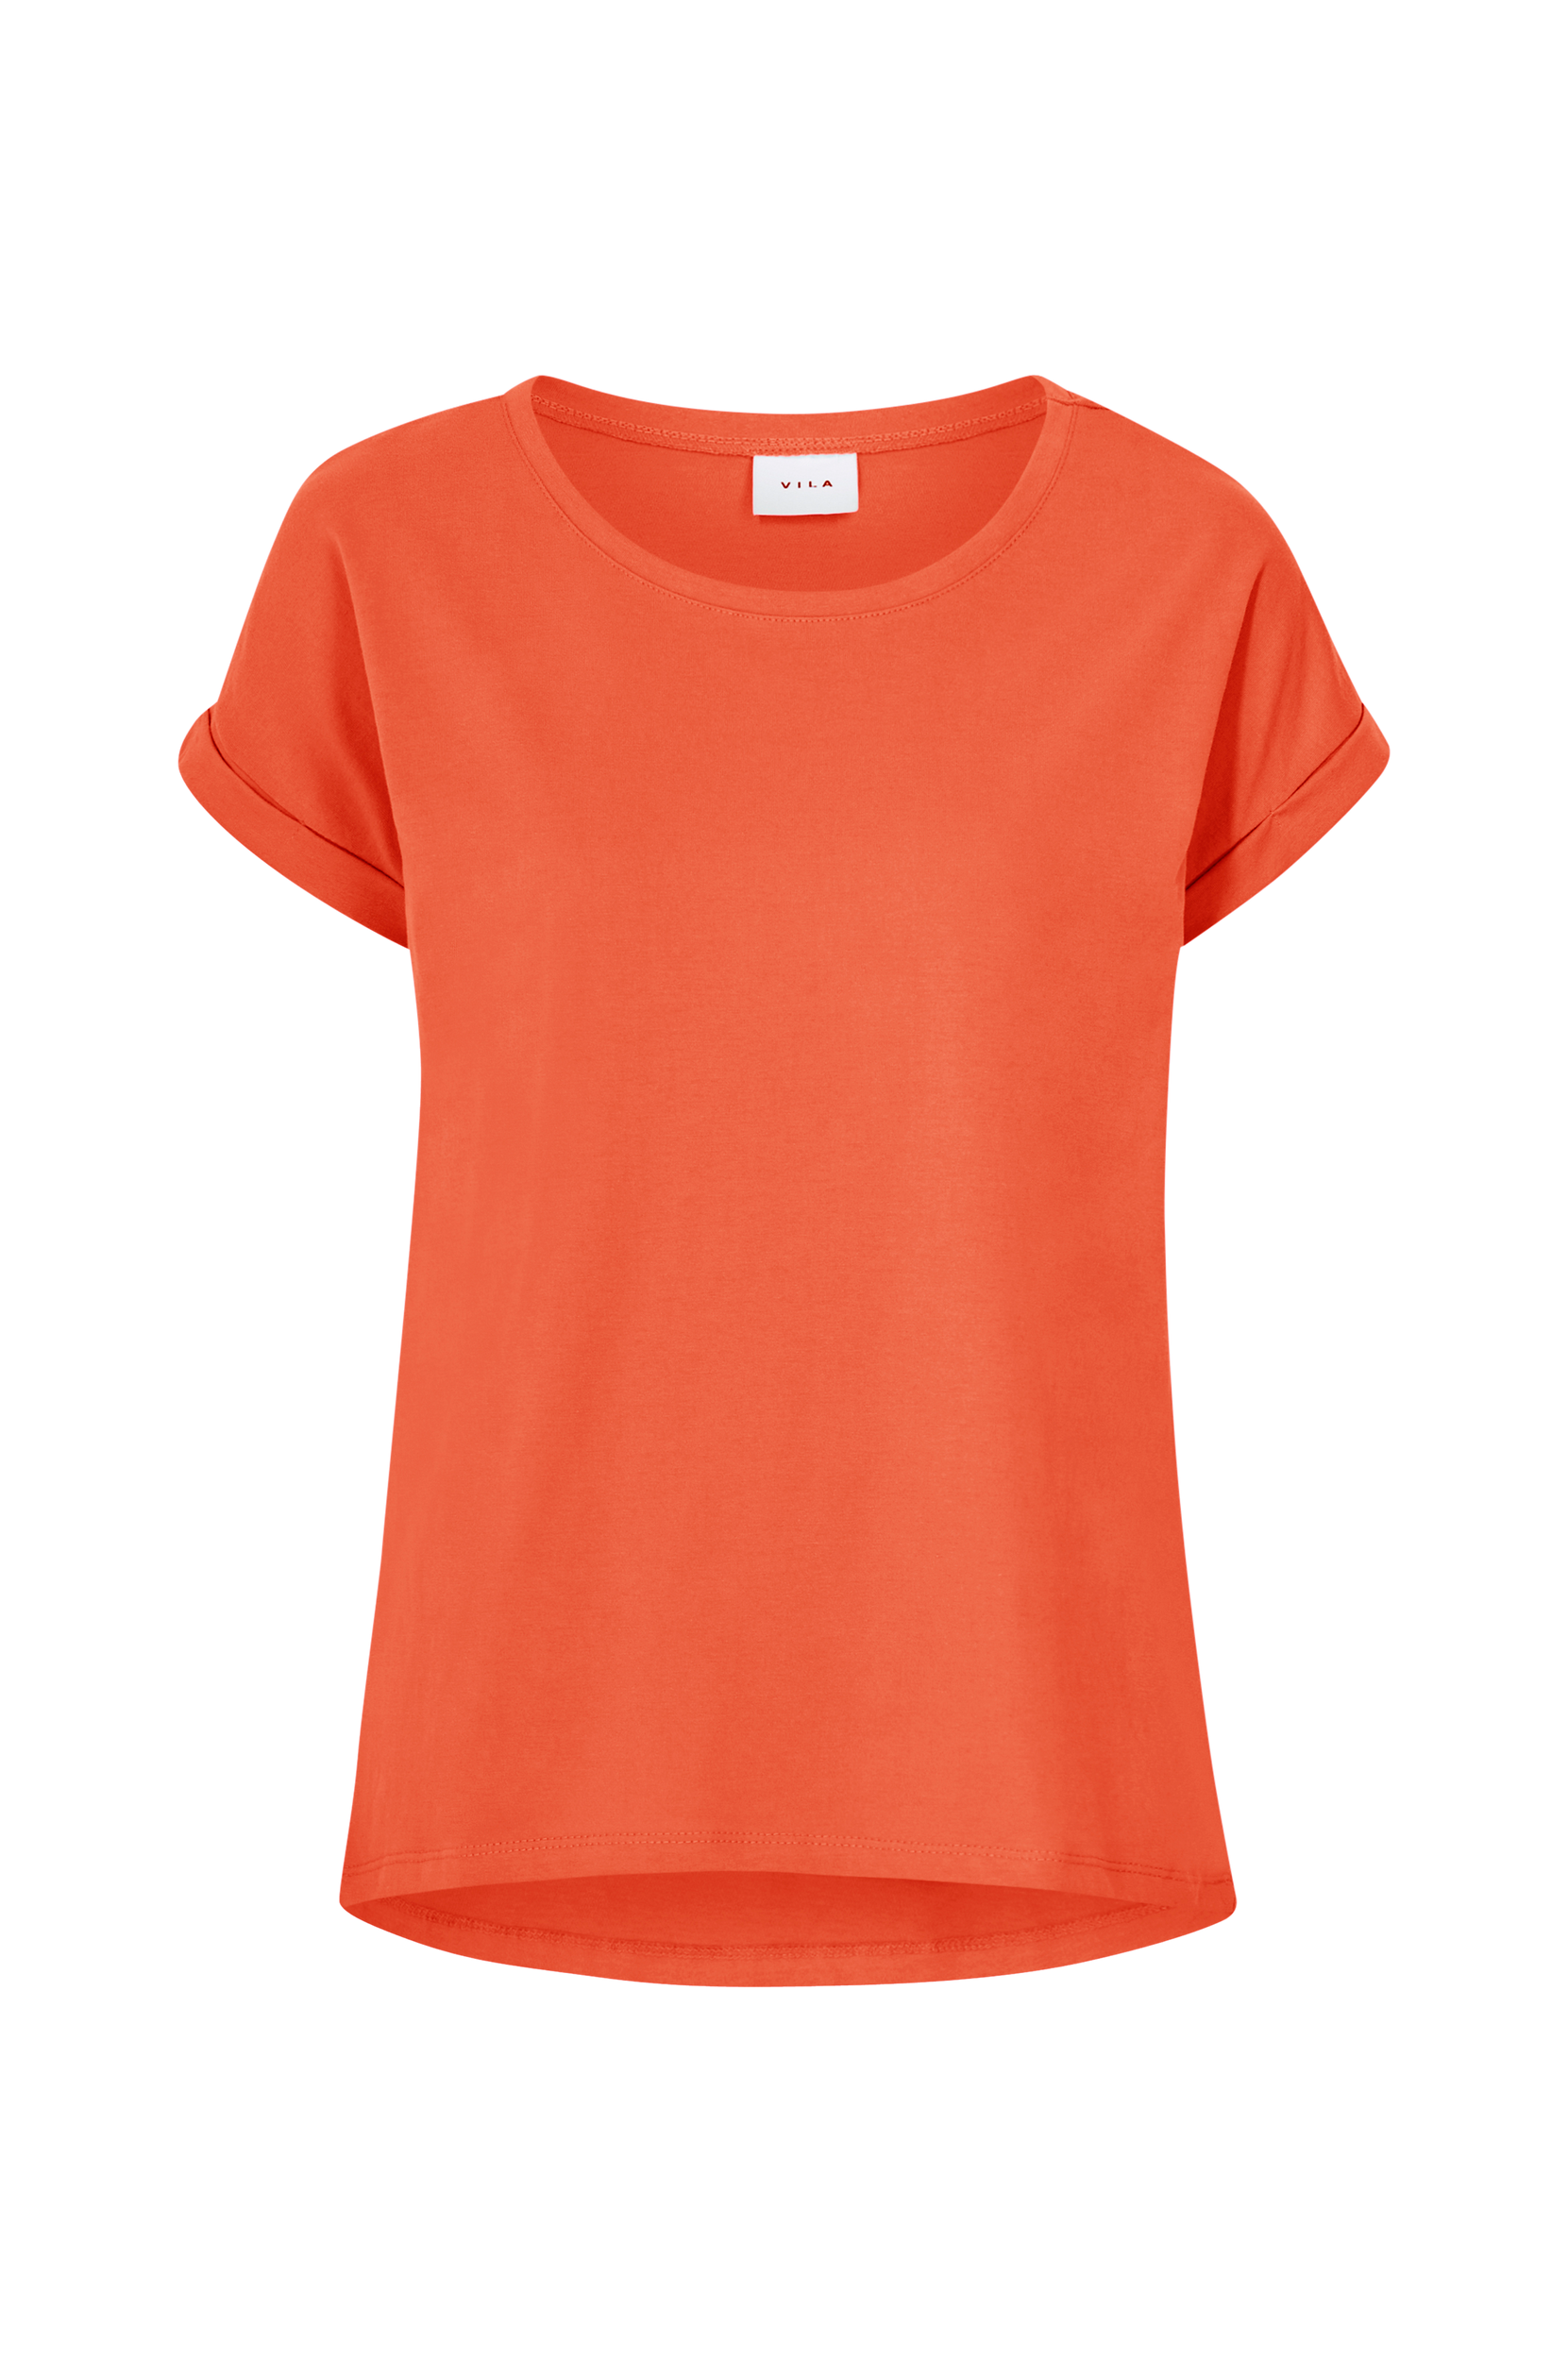 Vila - Top viDreamers New Pure T-shirt - Orange - 40